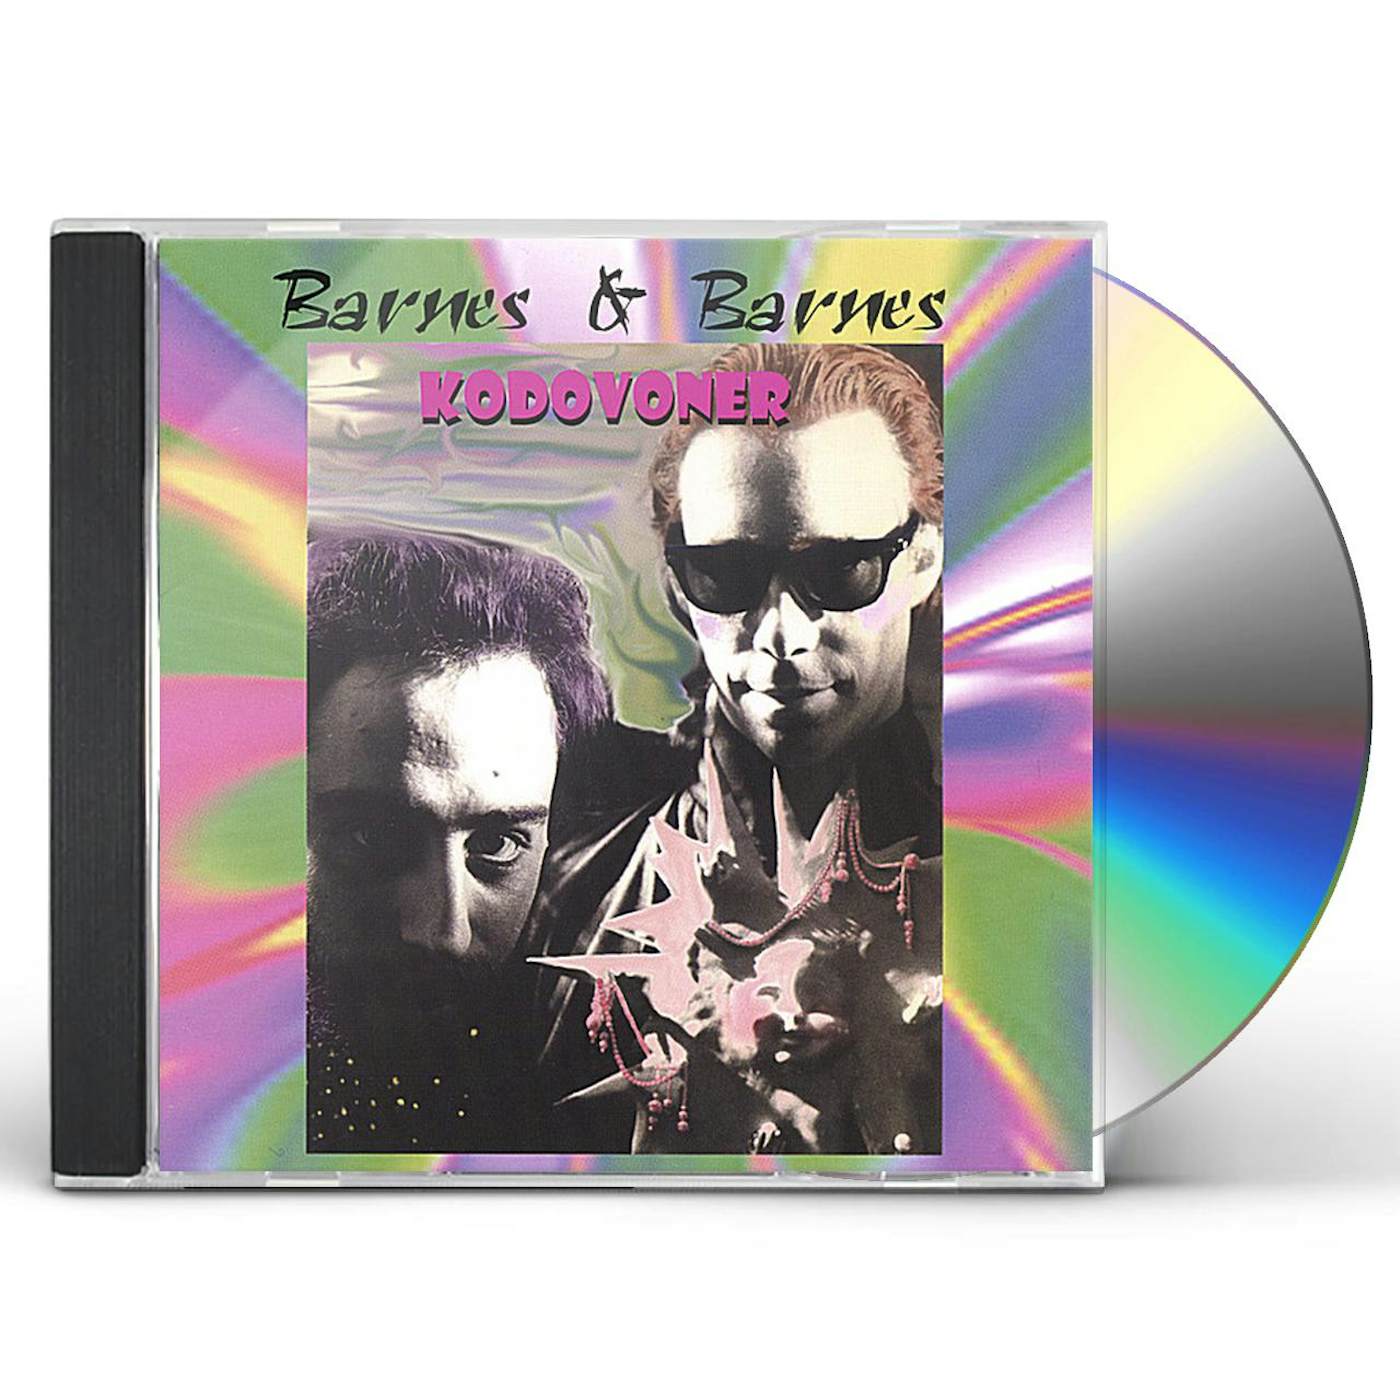 Barnes & Barnes KODOVONER CD